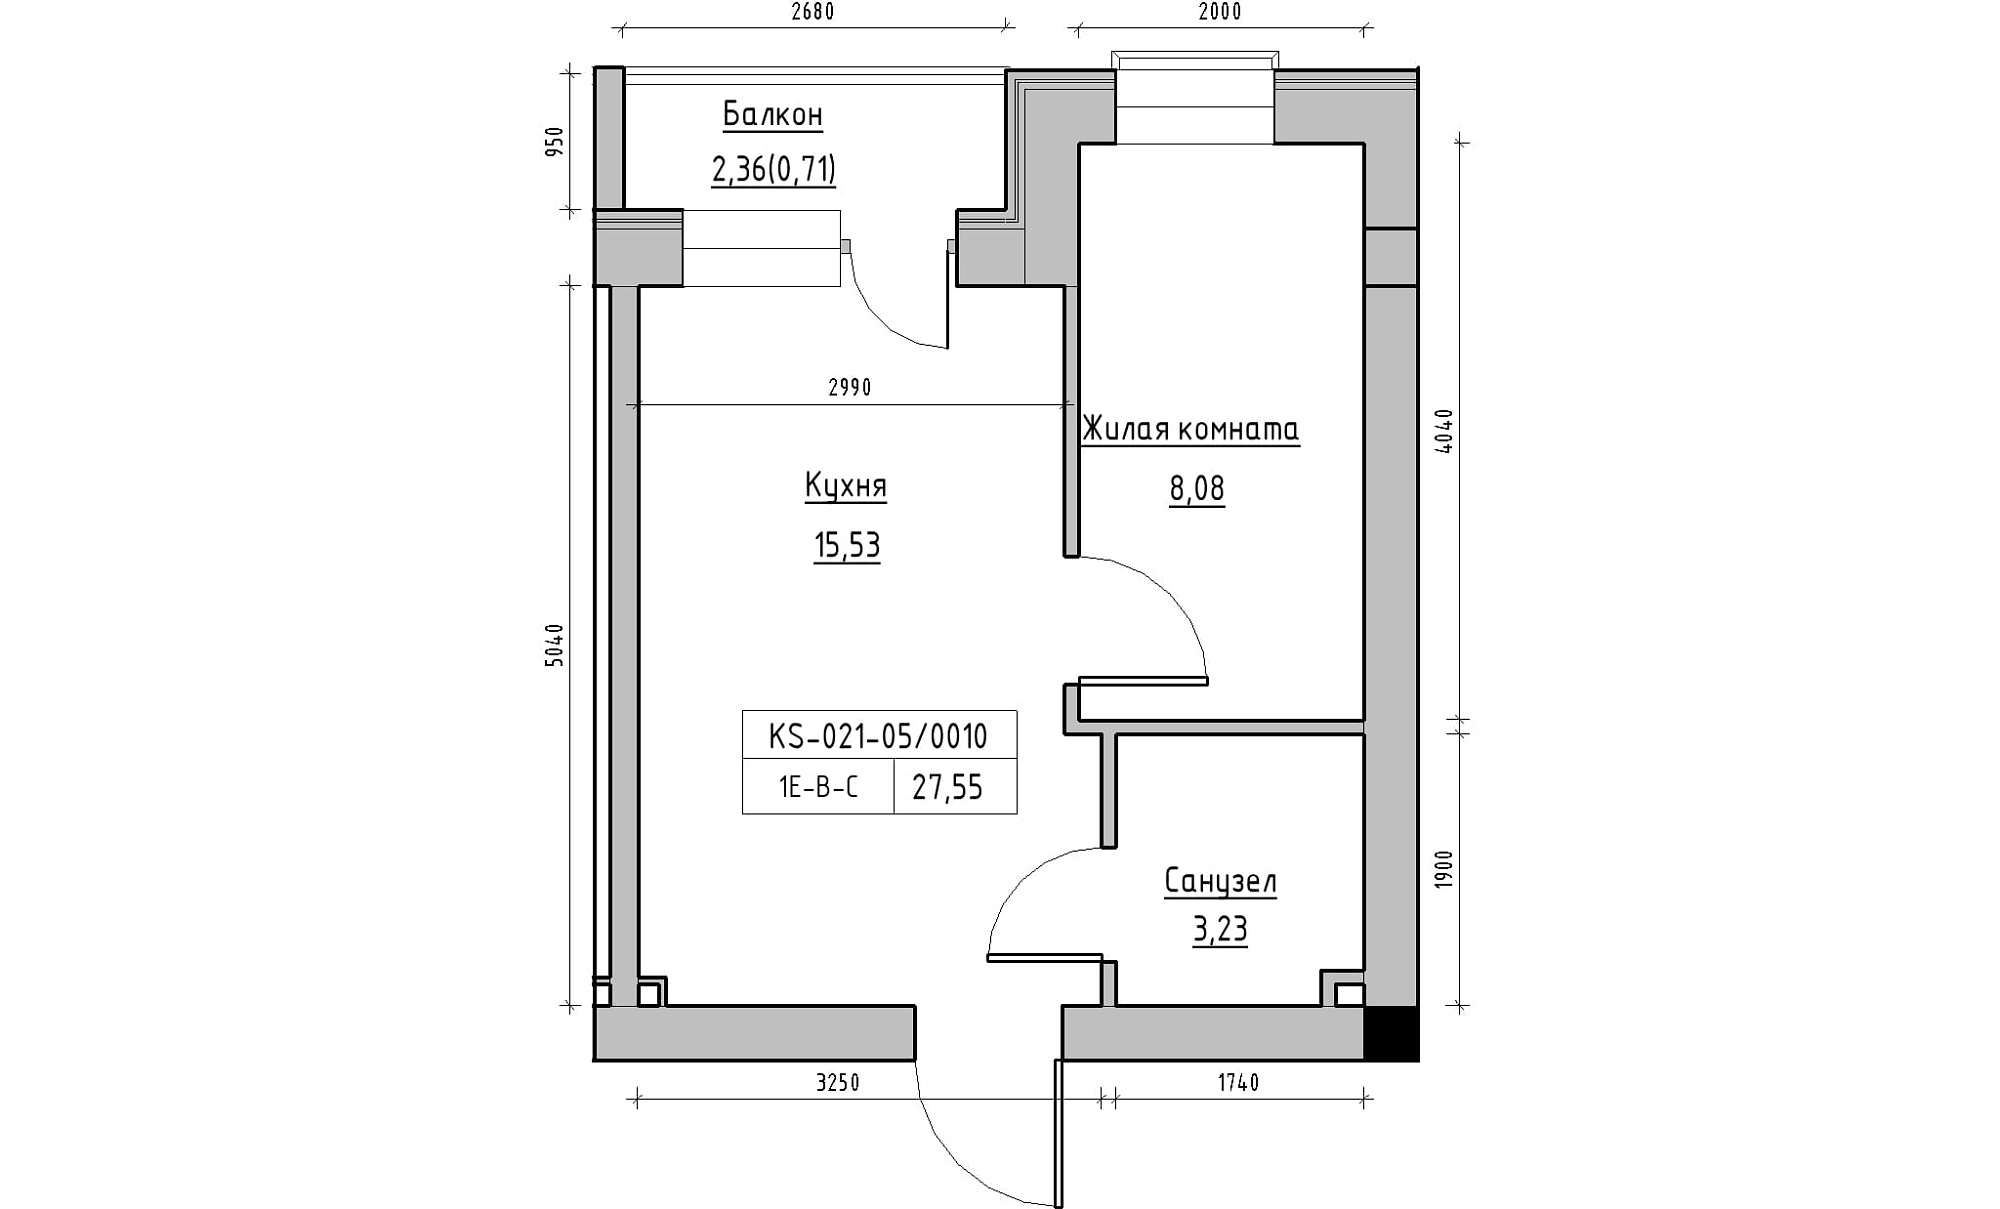 Planning 1-rm flats area 27.55m2, KS-021-05/0010.